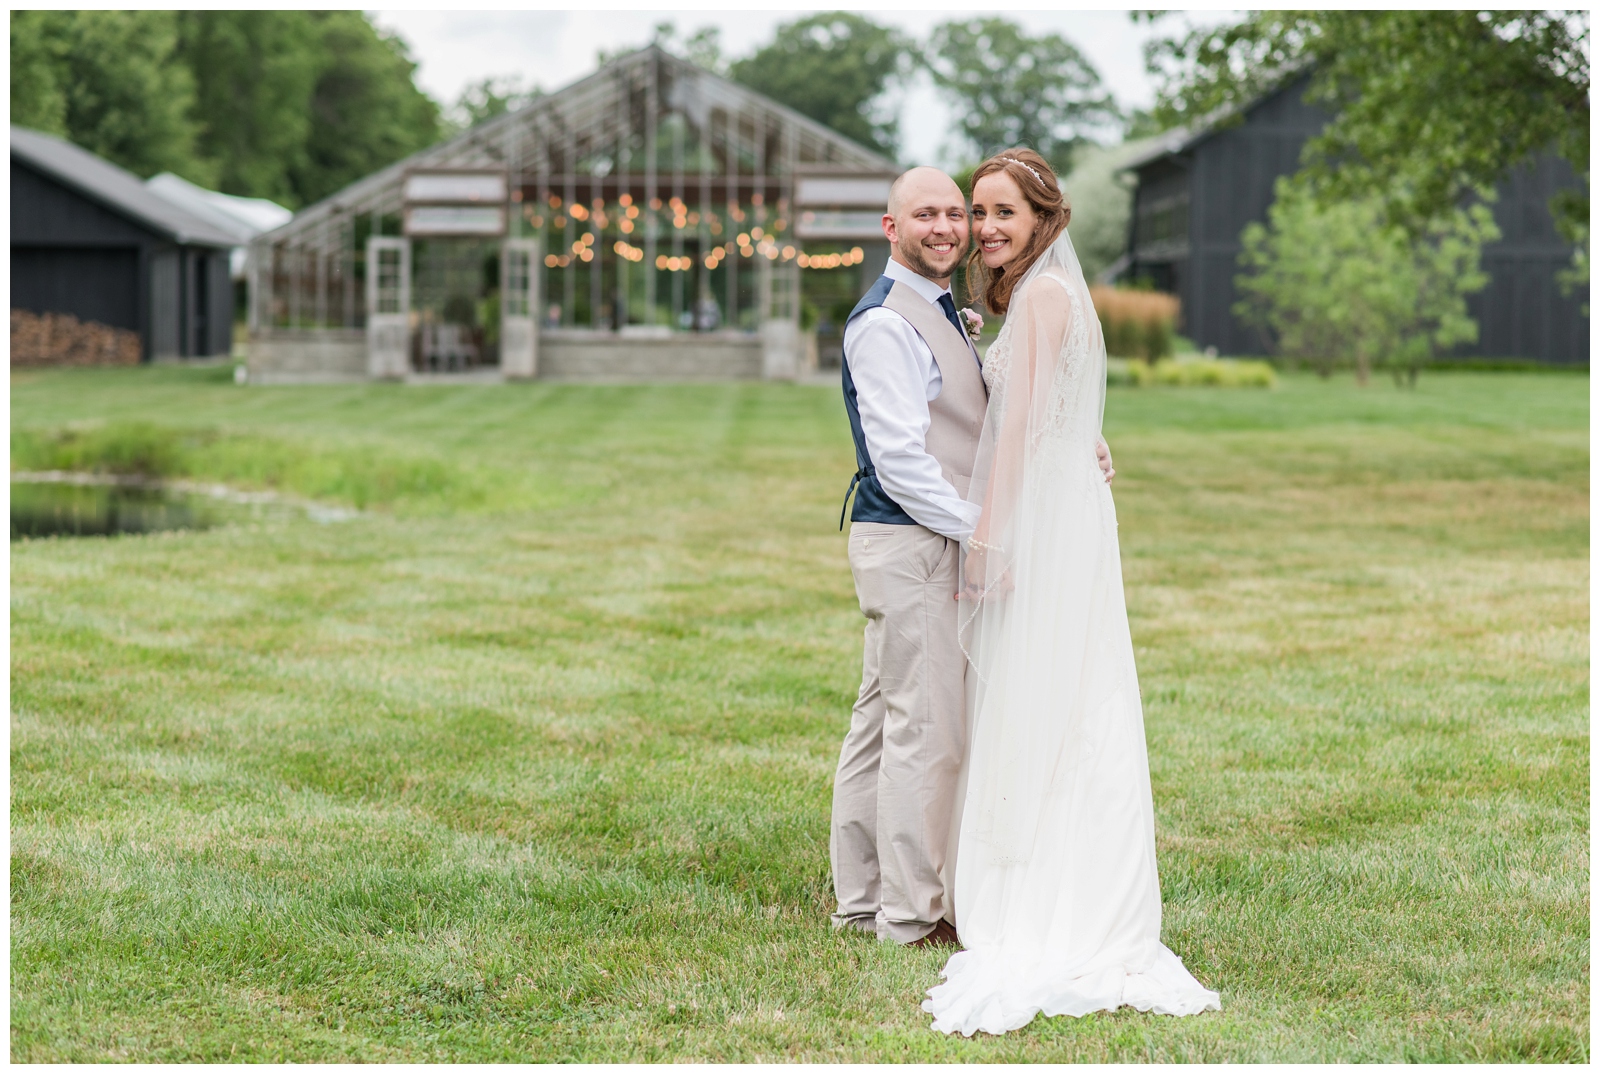 Oak Grove Jorgensen Farms wedding portraits of bride and groom by greenhouse